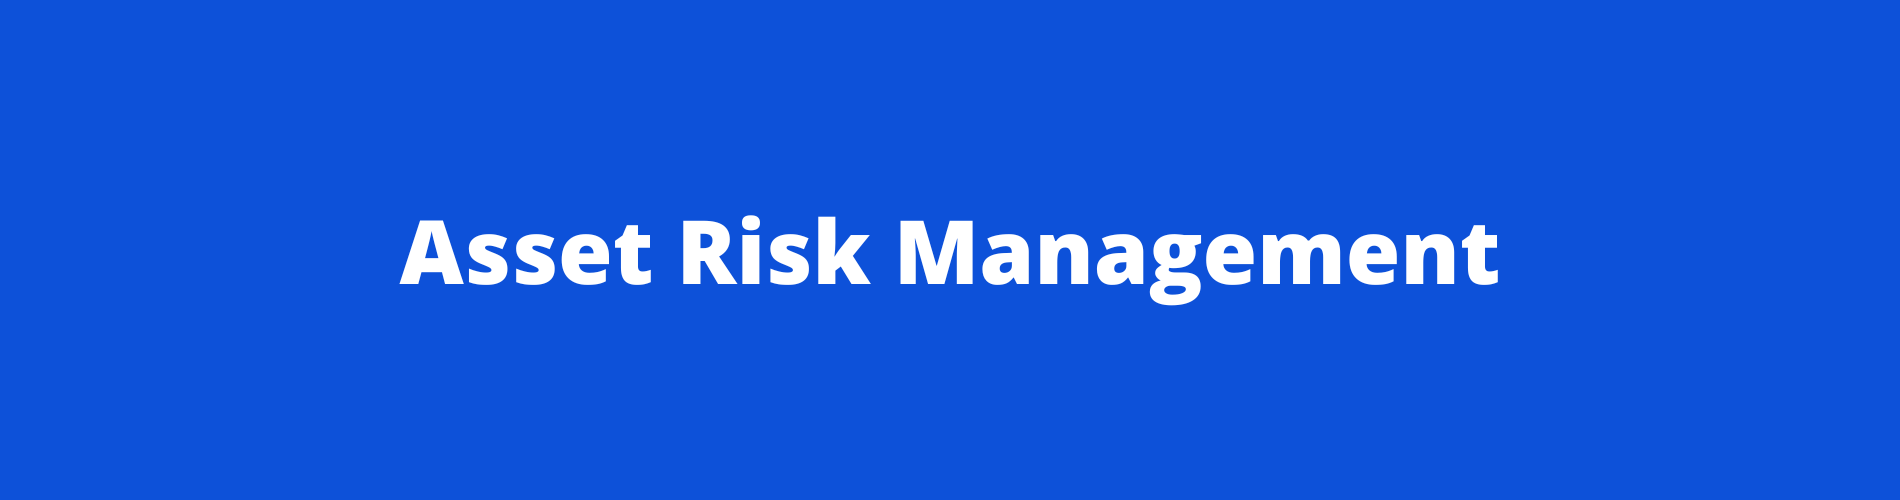 Asset Risk Management - Infraon